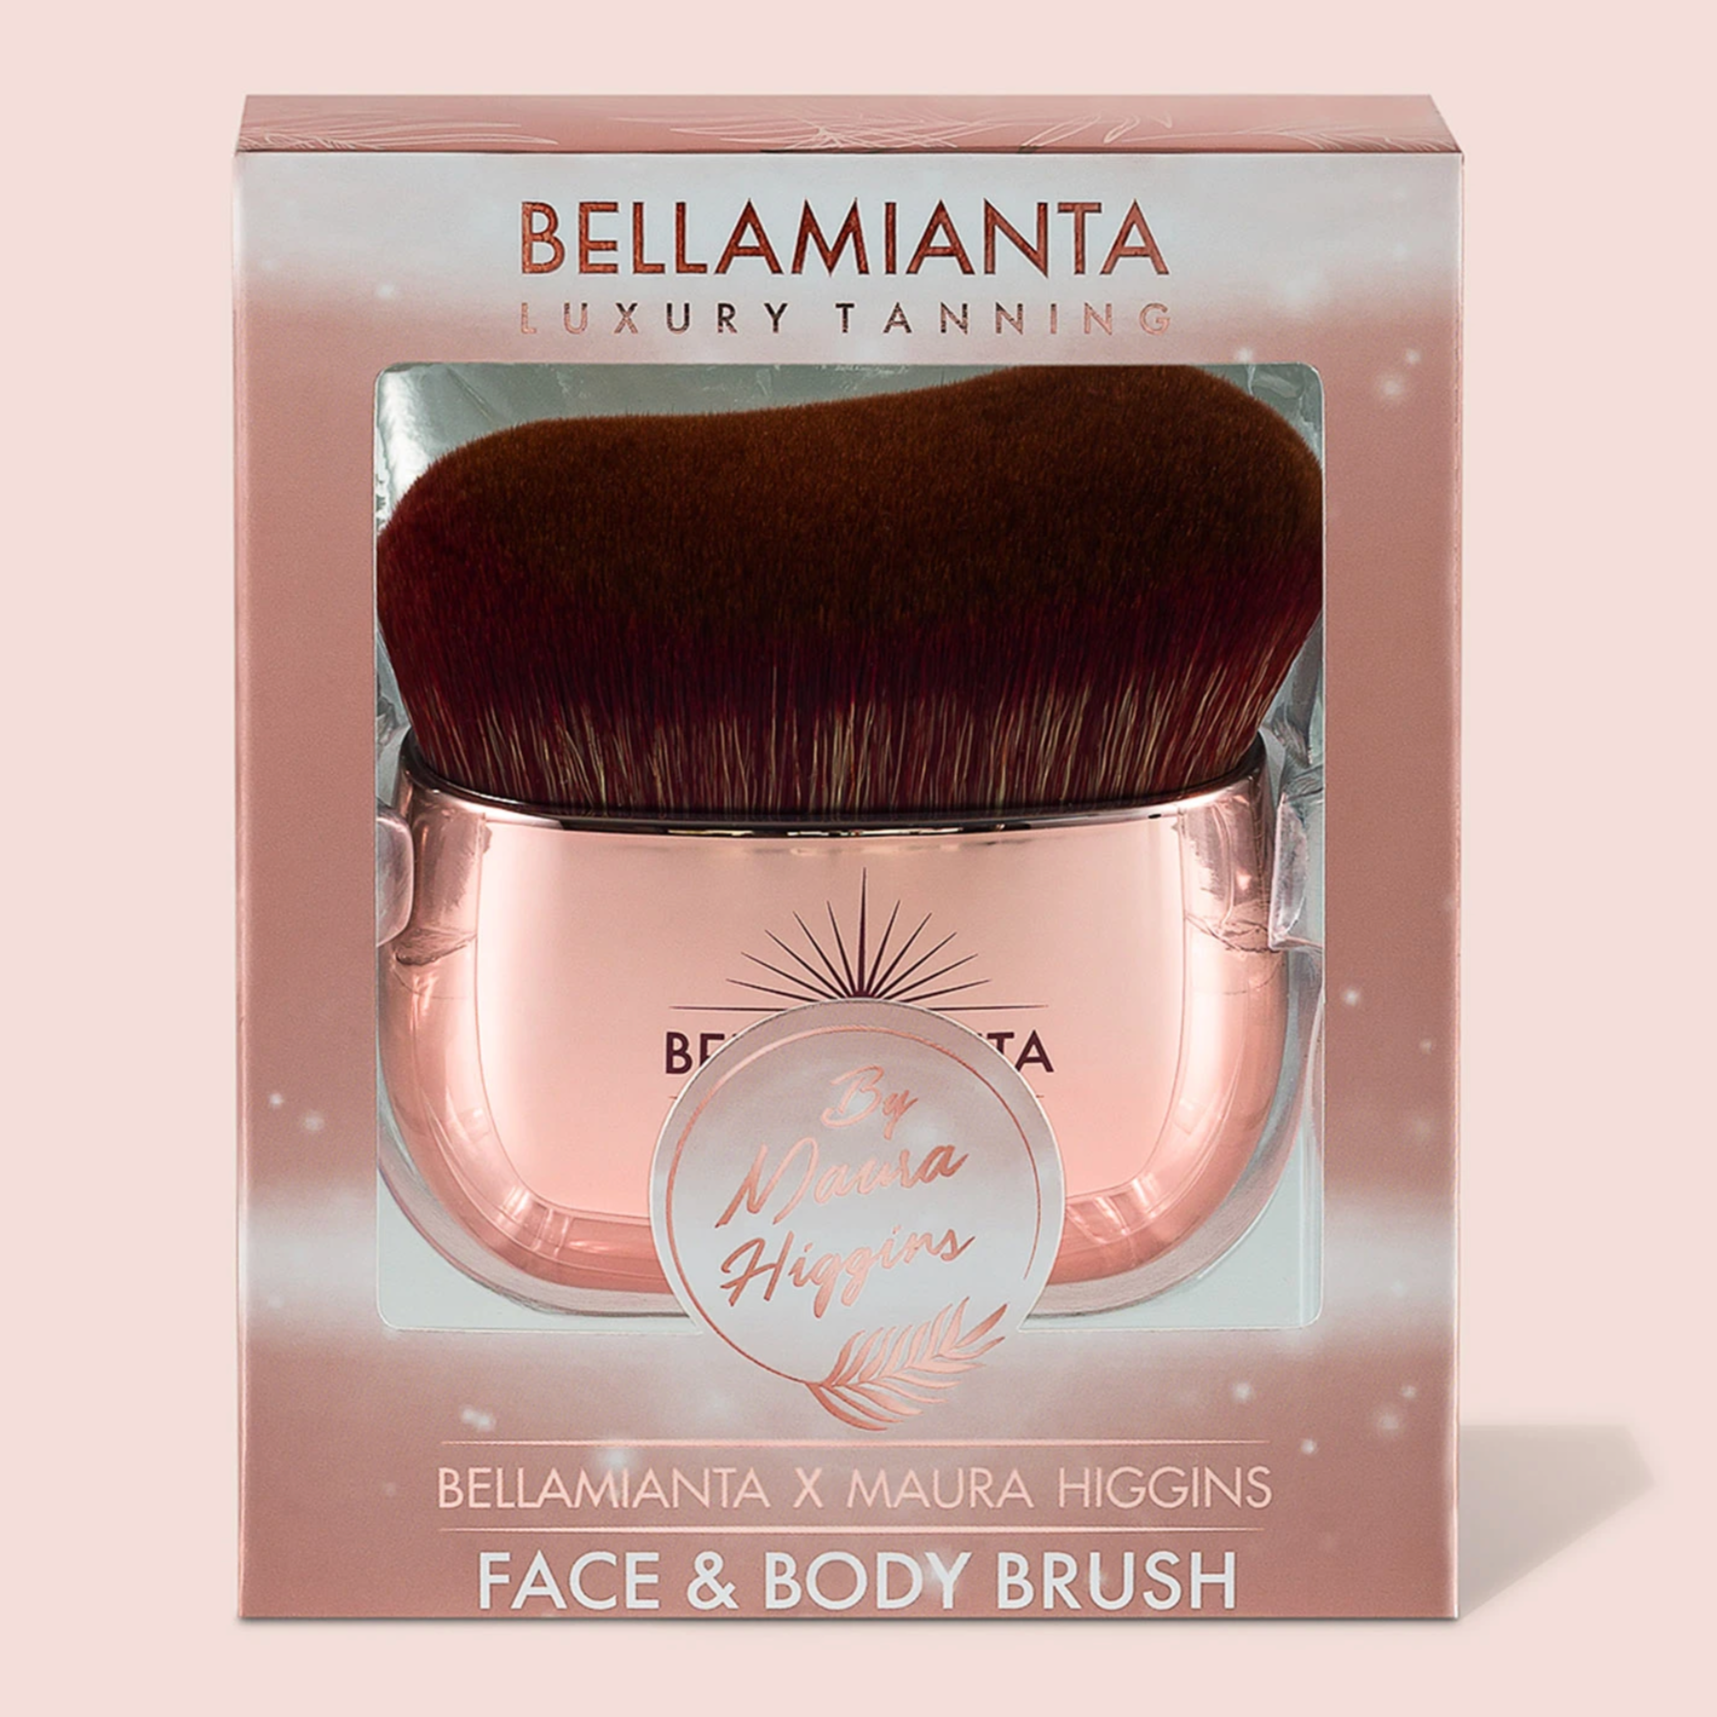 BELLAMIANTA Face & Body Brush by Maura Higgins, in packaging